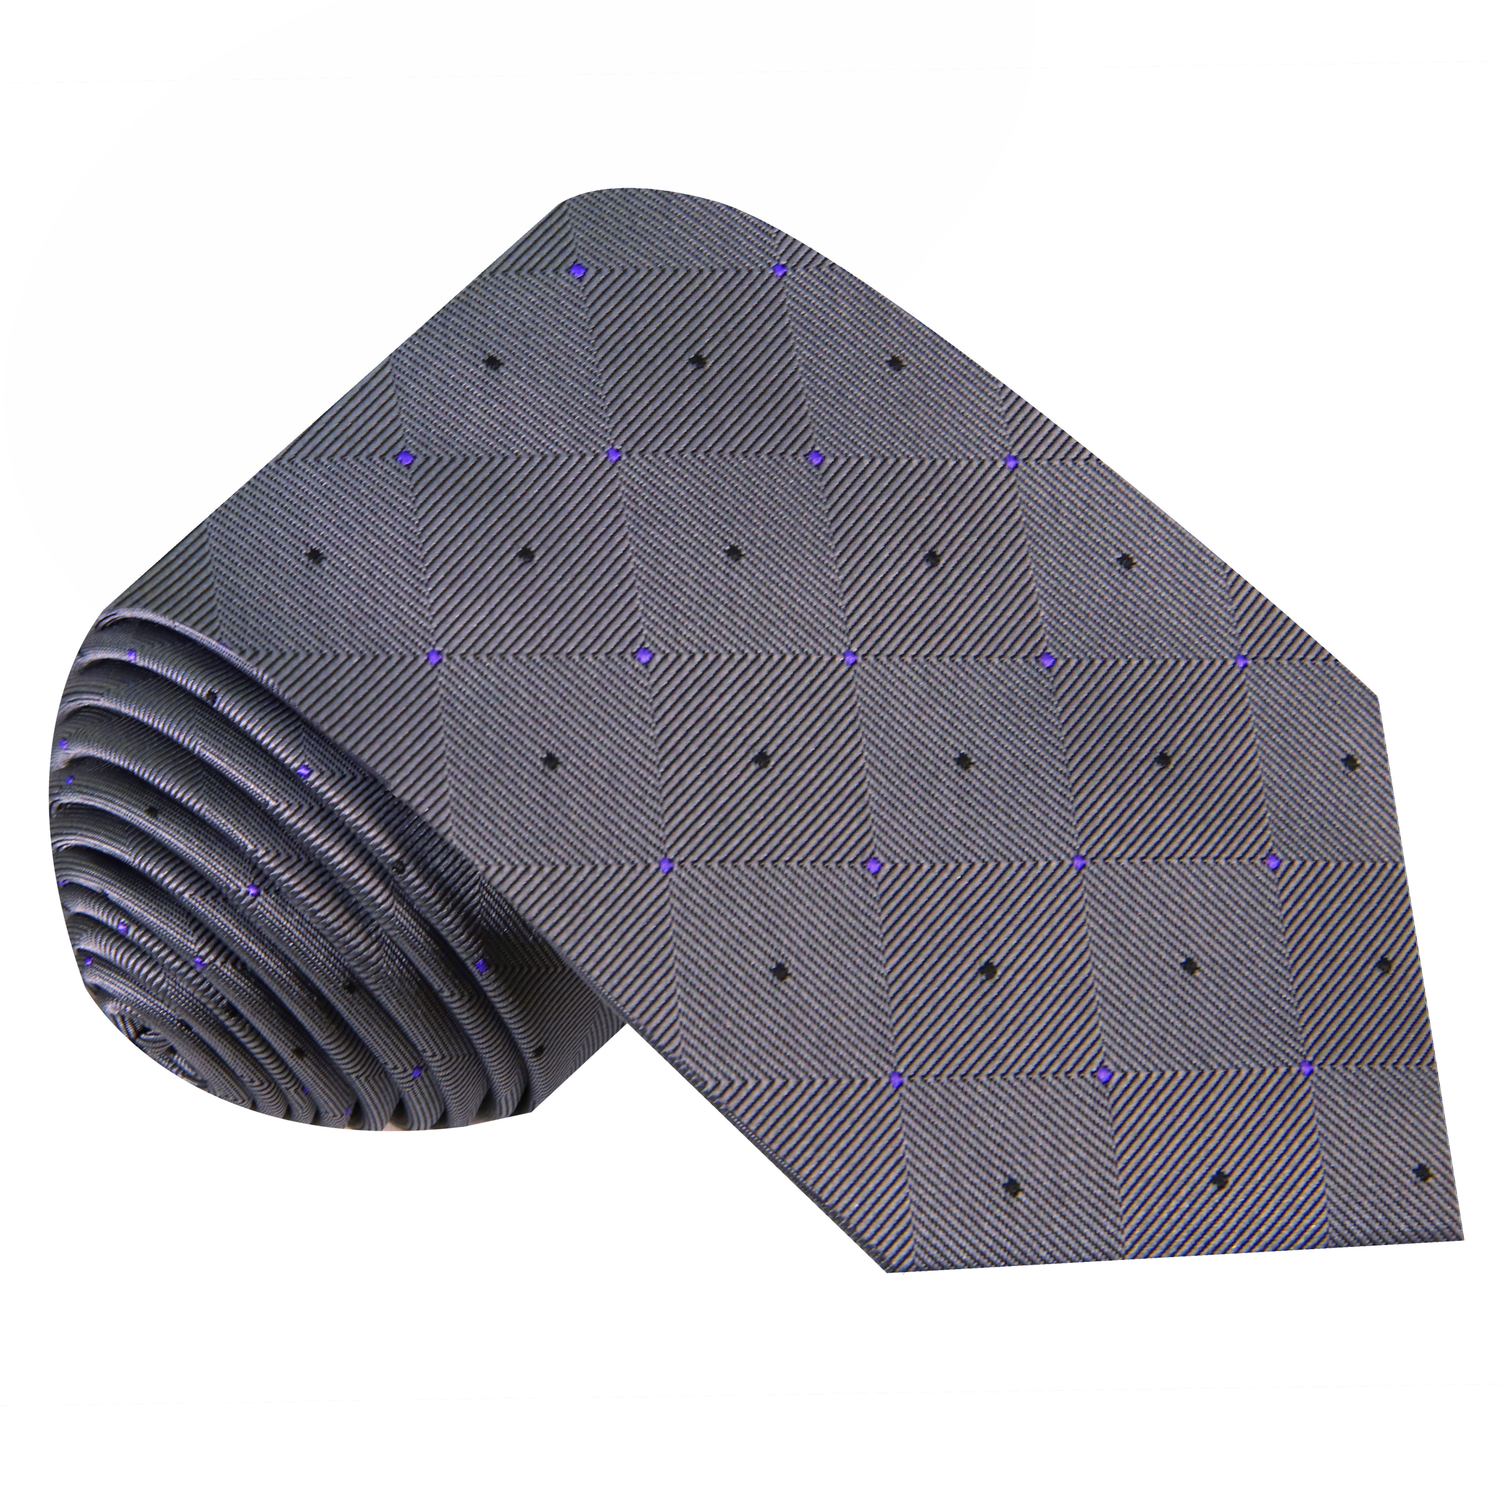 Rolled Up View: Grey Black Purple Geometric Tie